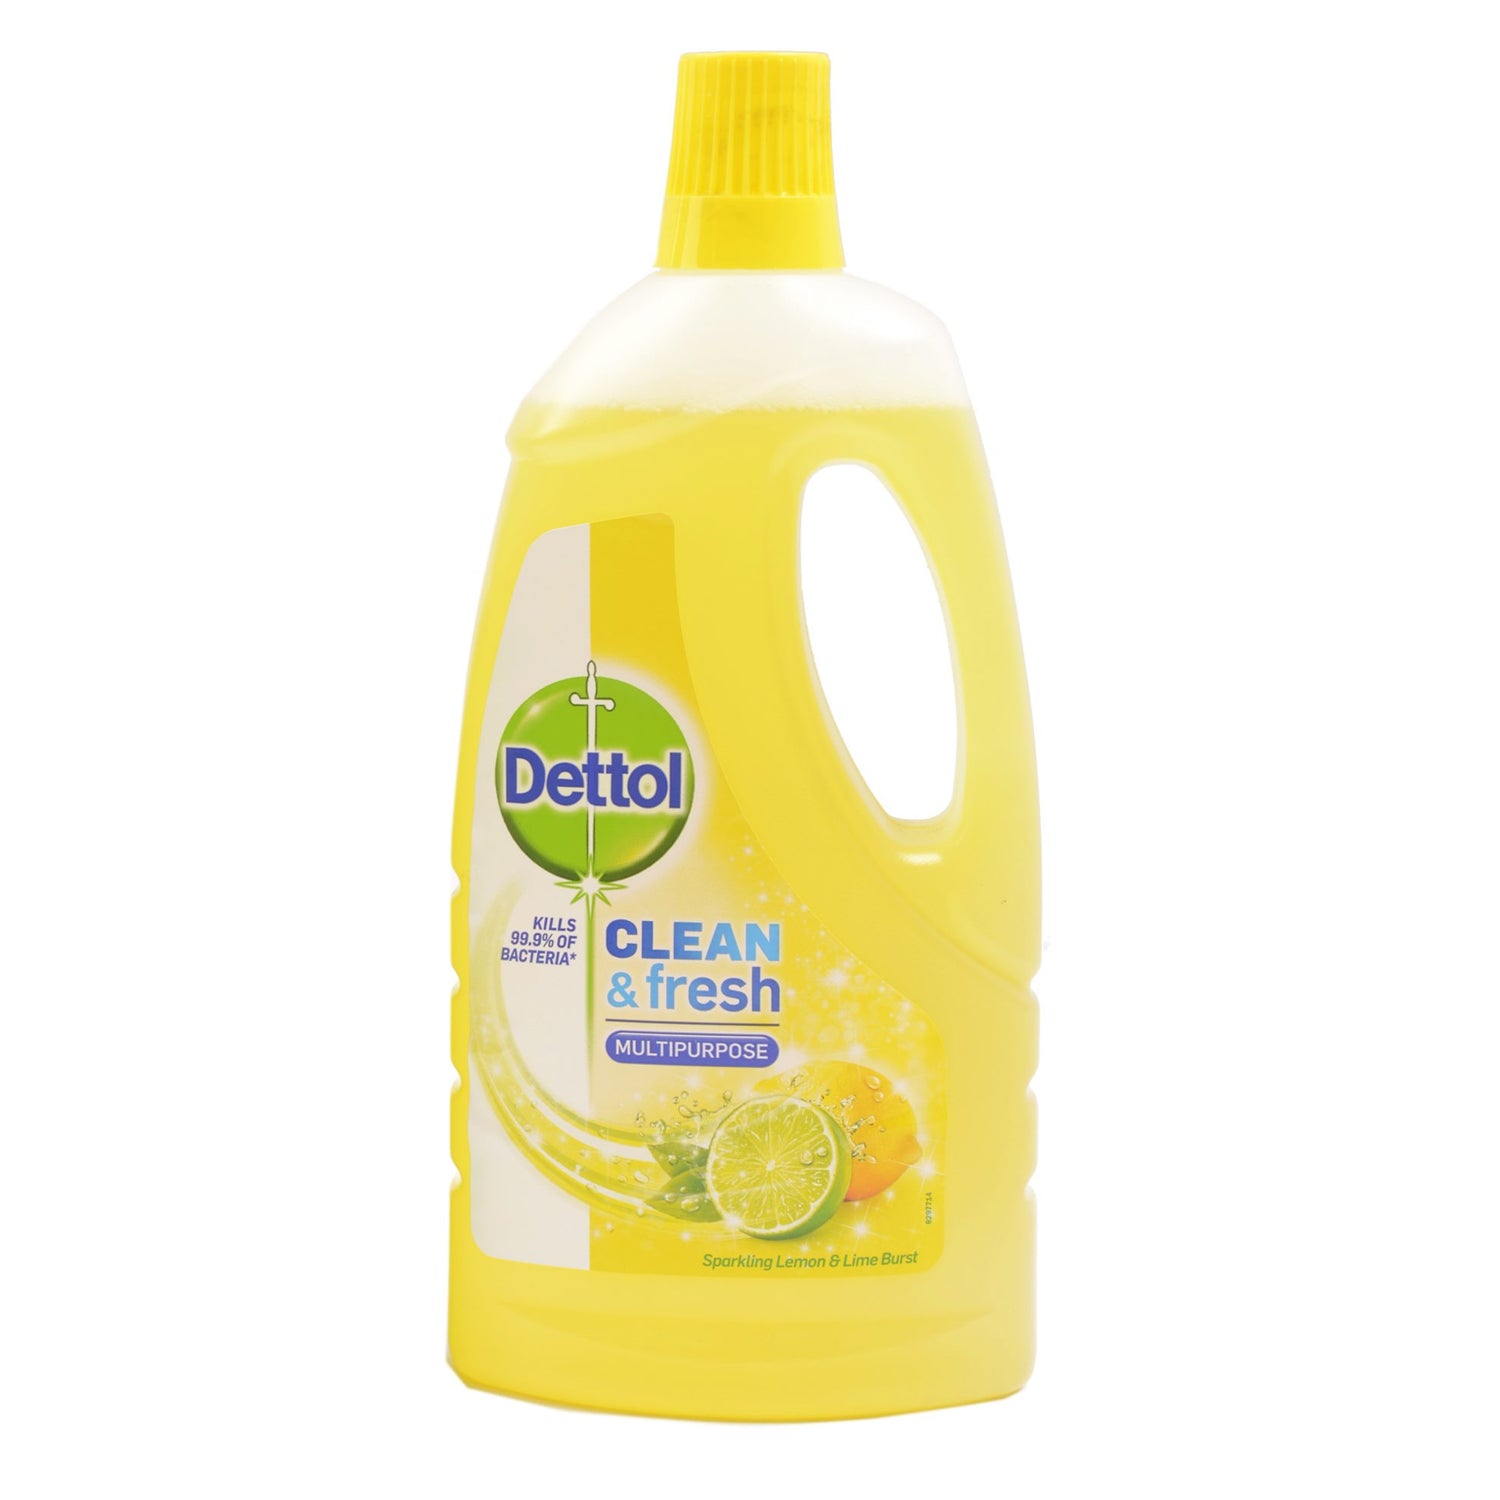 Dettol - Multipurpose & Surface Cleaner - Clean & Fresh - Lime & Lemon -1000 ML (1L) - Imported